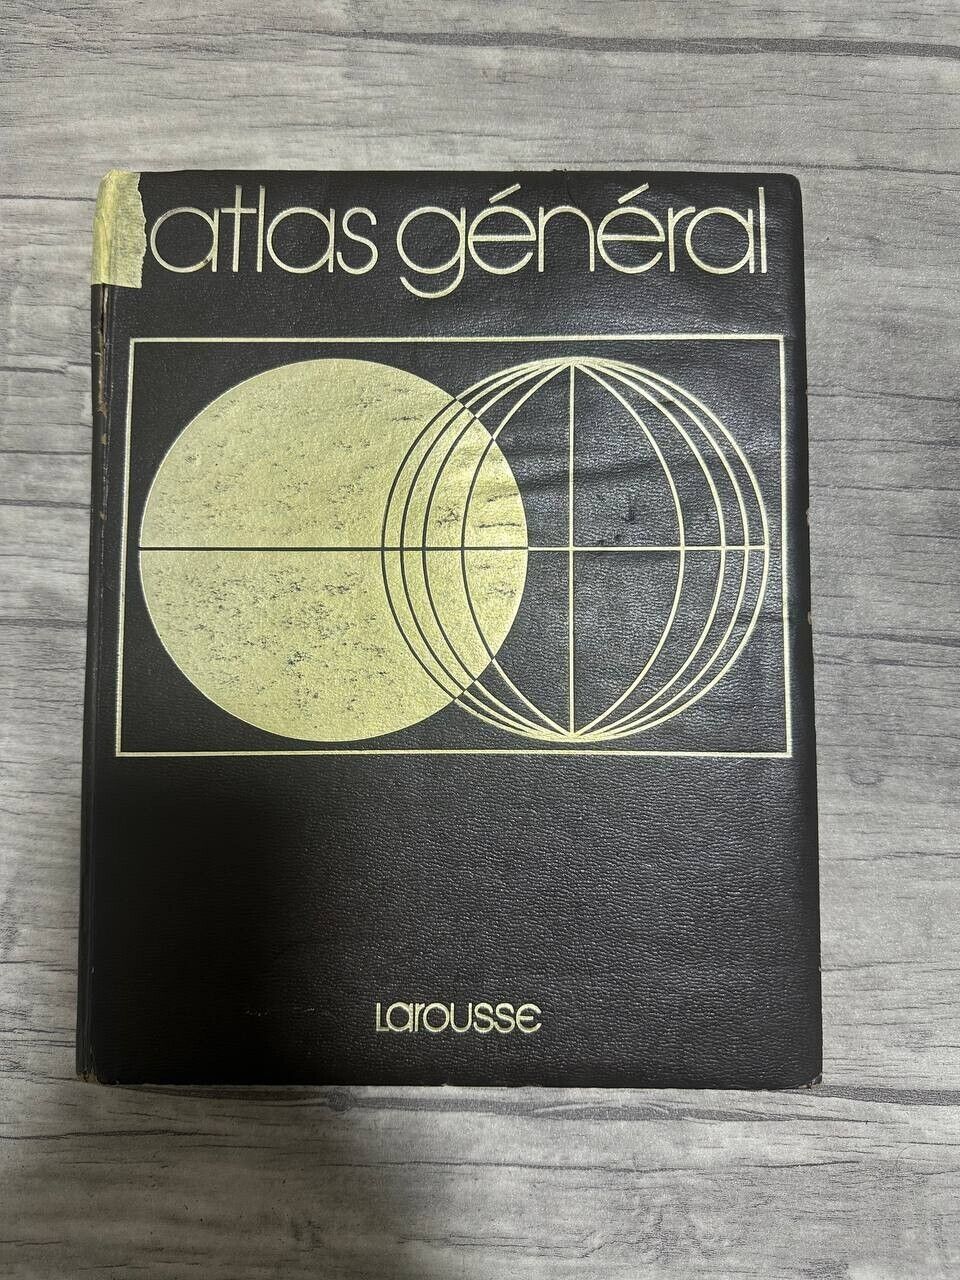 Vintage Atlas général Larousse Book -41 Years of Cartographic Exploration (1983)